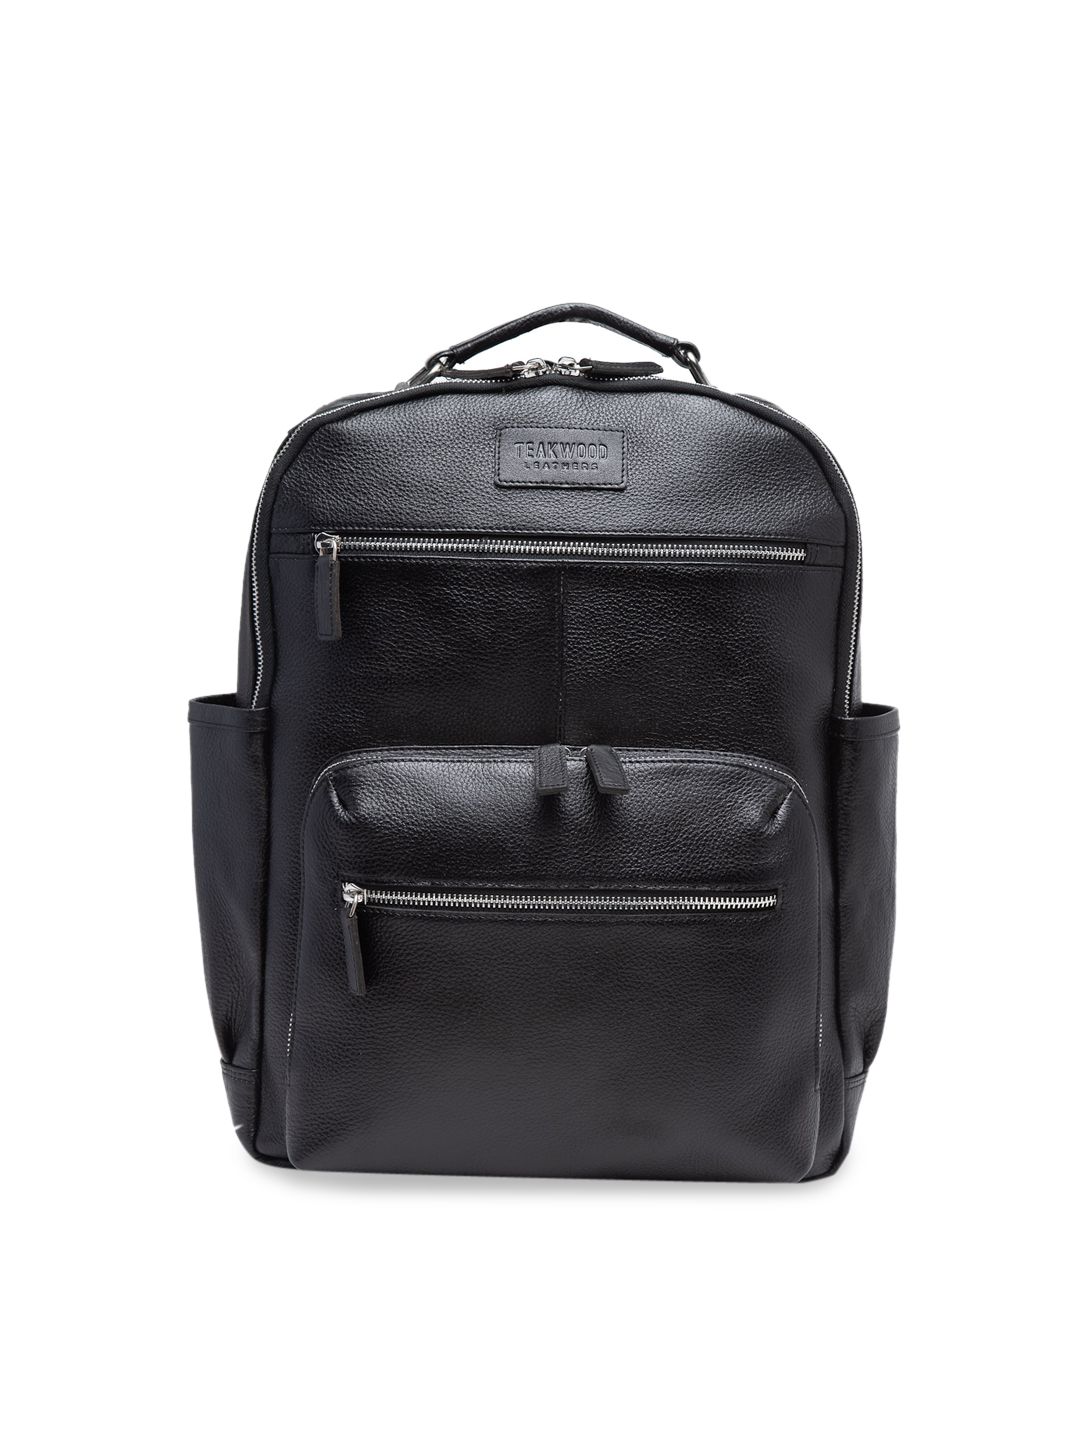 Teakwood Leathers Unisex Black Solid Medium Leather Backpack Price in India